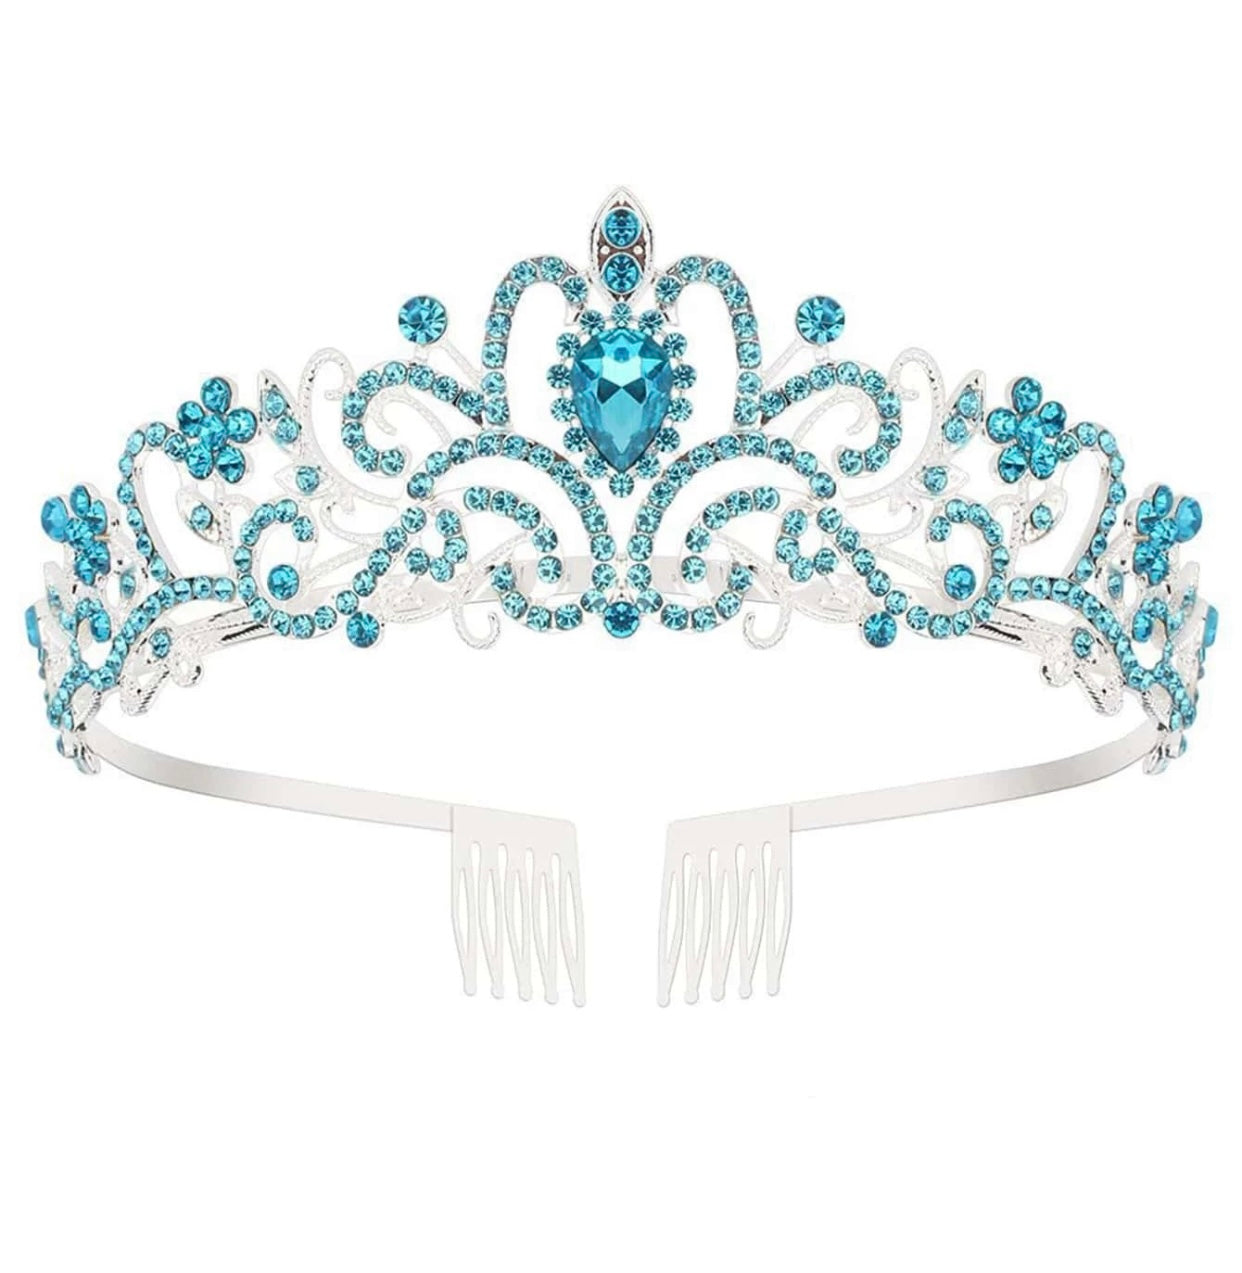 Blue Rhinestone Tiara, Crown, Prom, Wedding, Dancing, Metal Tiara